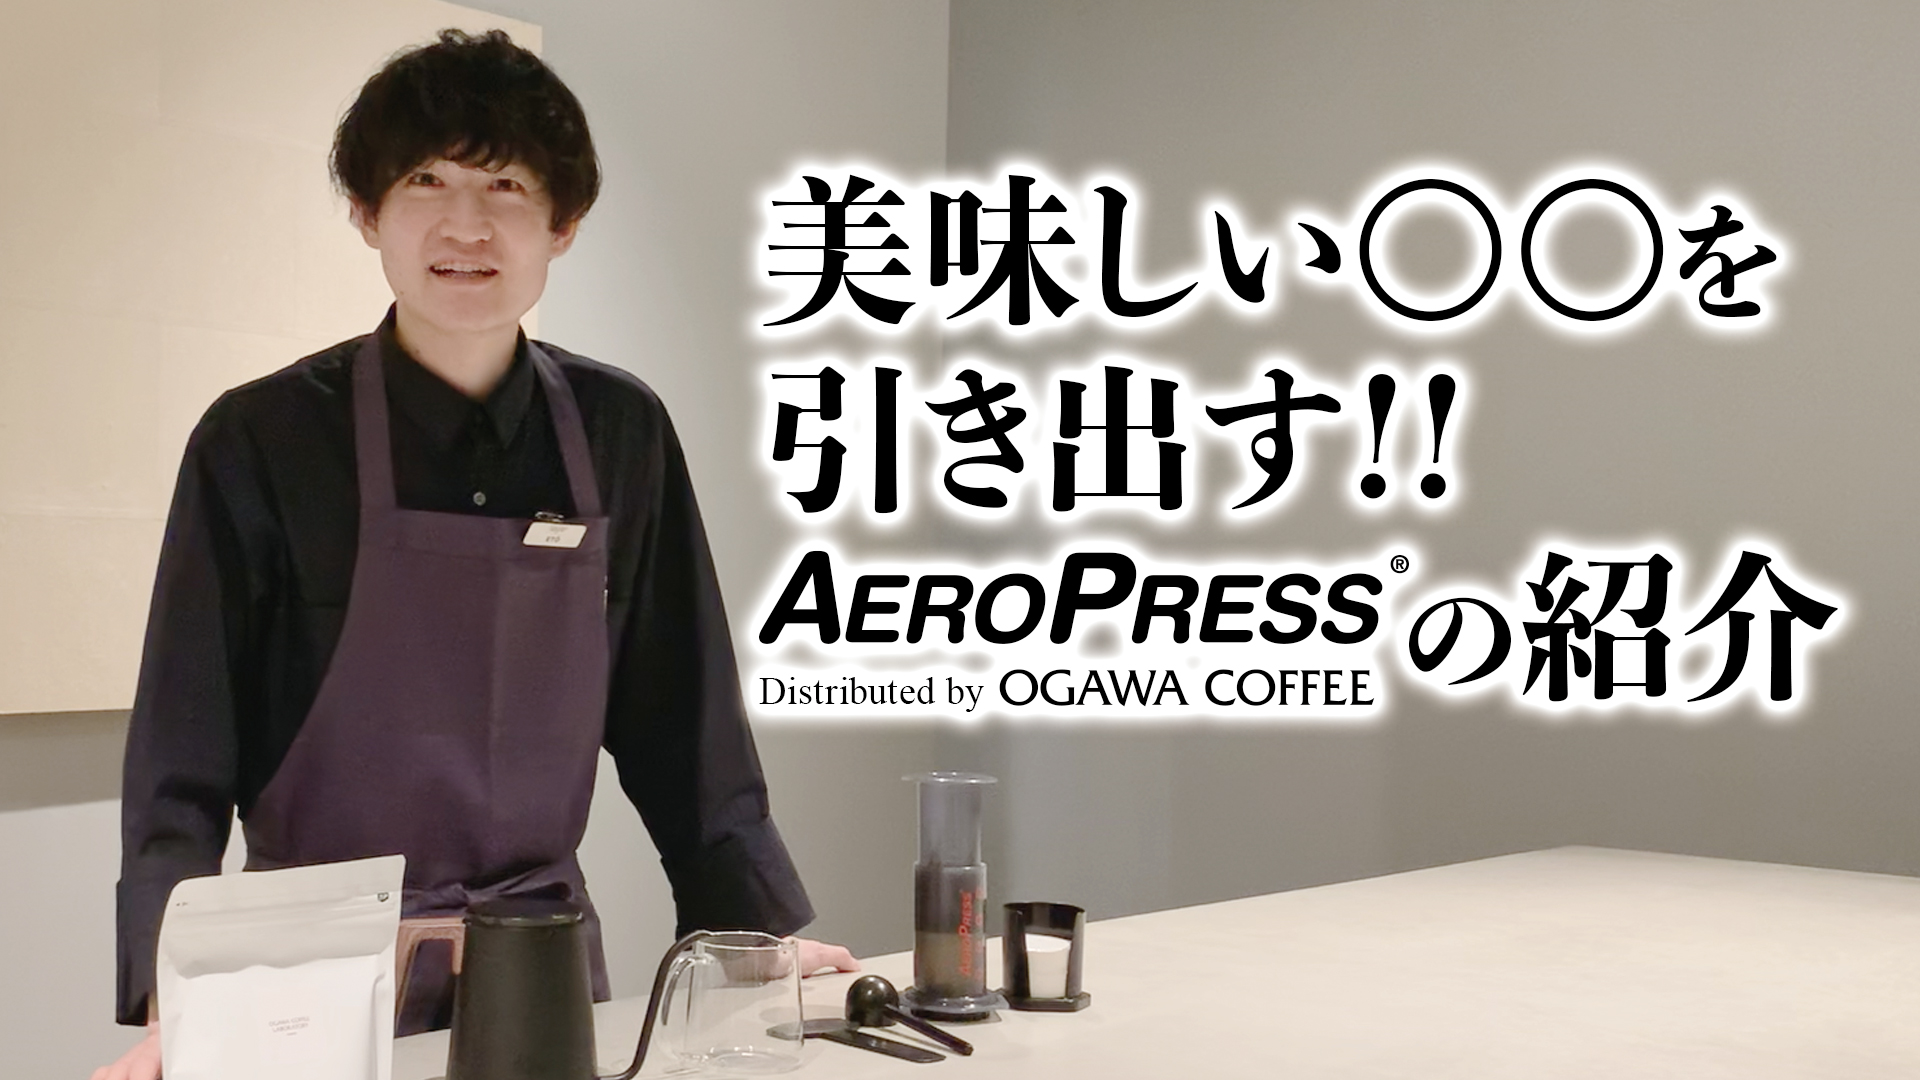 YOUTUBE：OGAWA COFFEE LABORATORY衛藤バリスタが教える、美味しいところを引き出す『エアロプレス（AEROPRESS®）』おすすめのレシピ